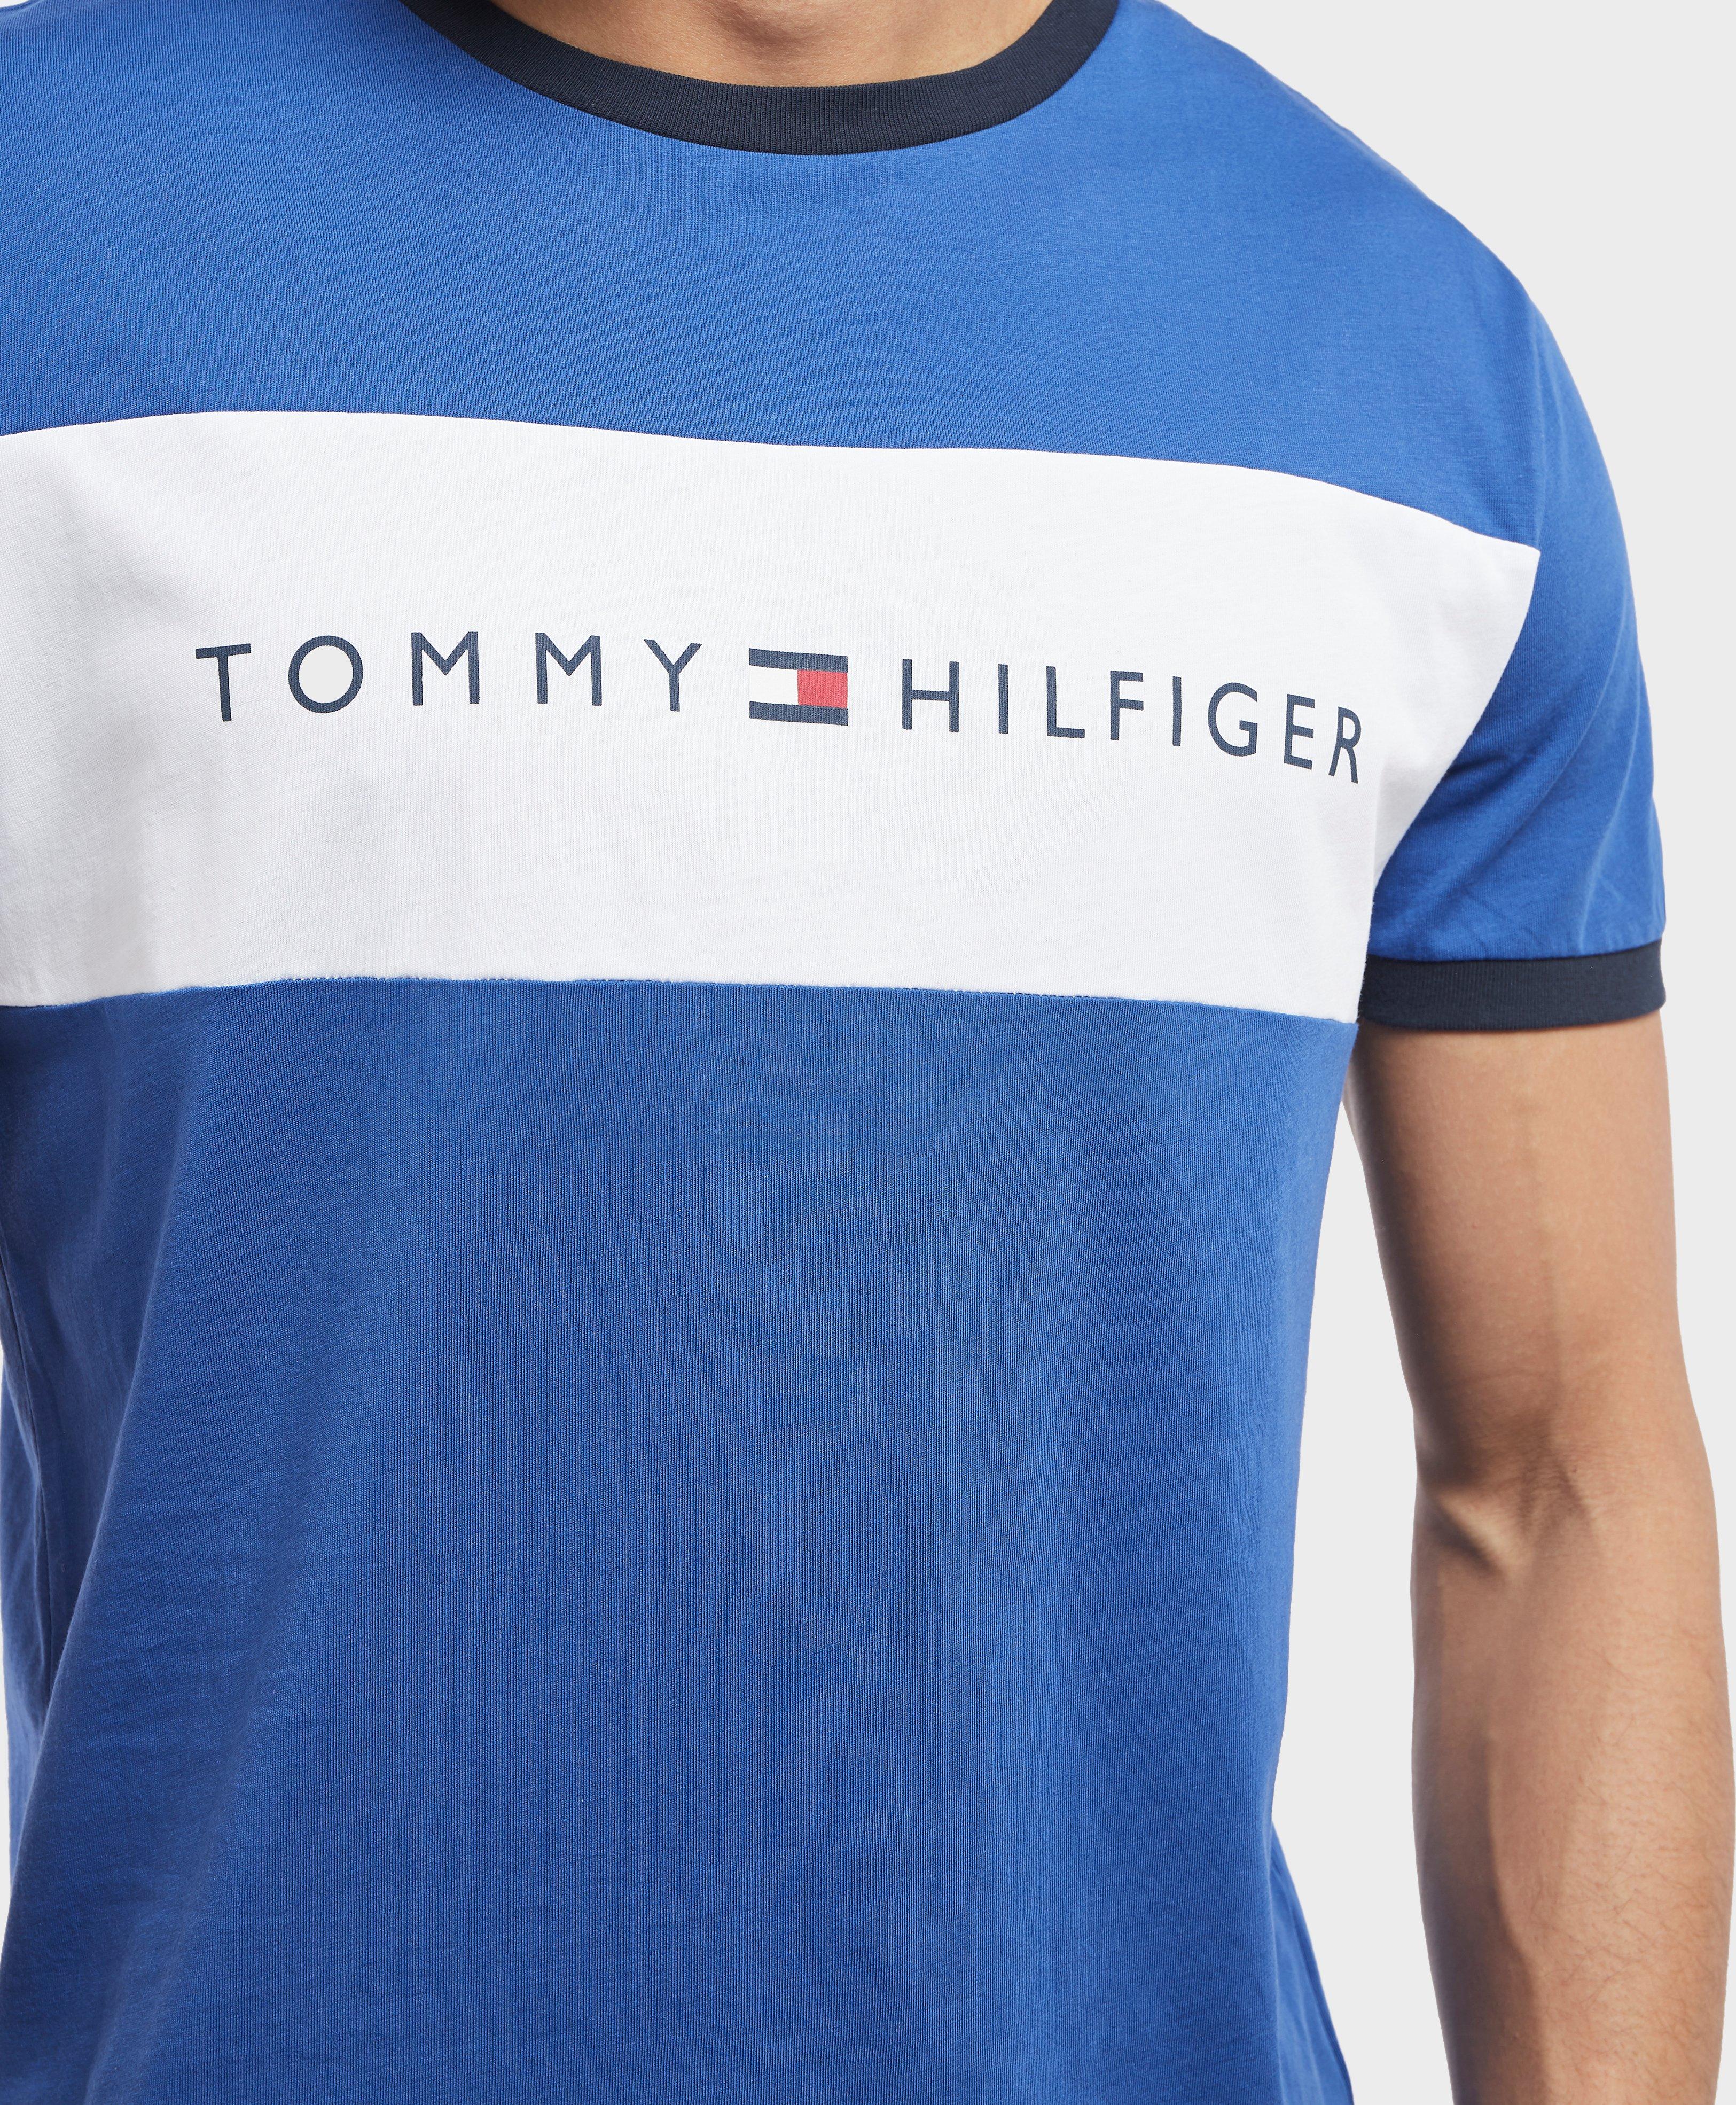 Tommy hilfiger cut and sew logo short 